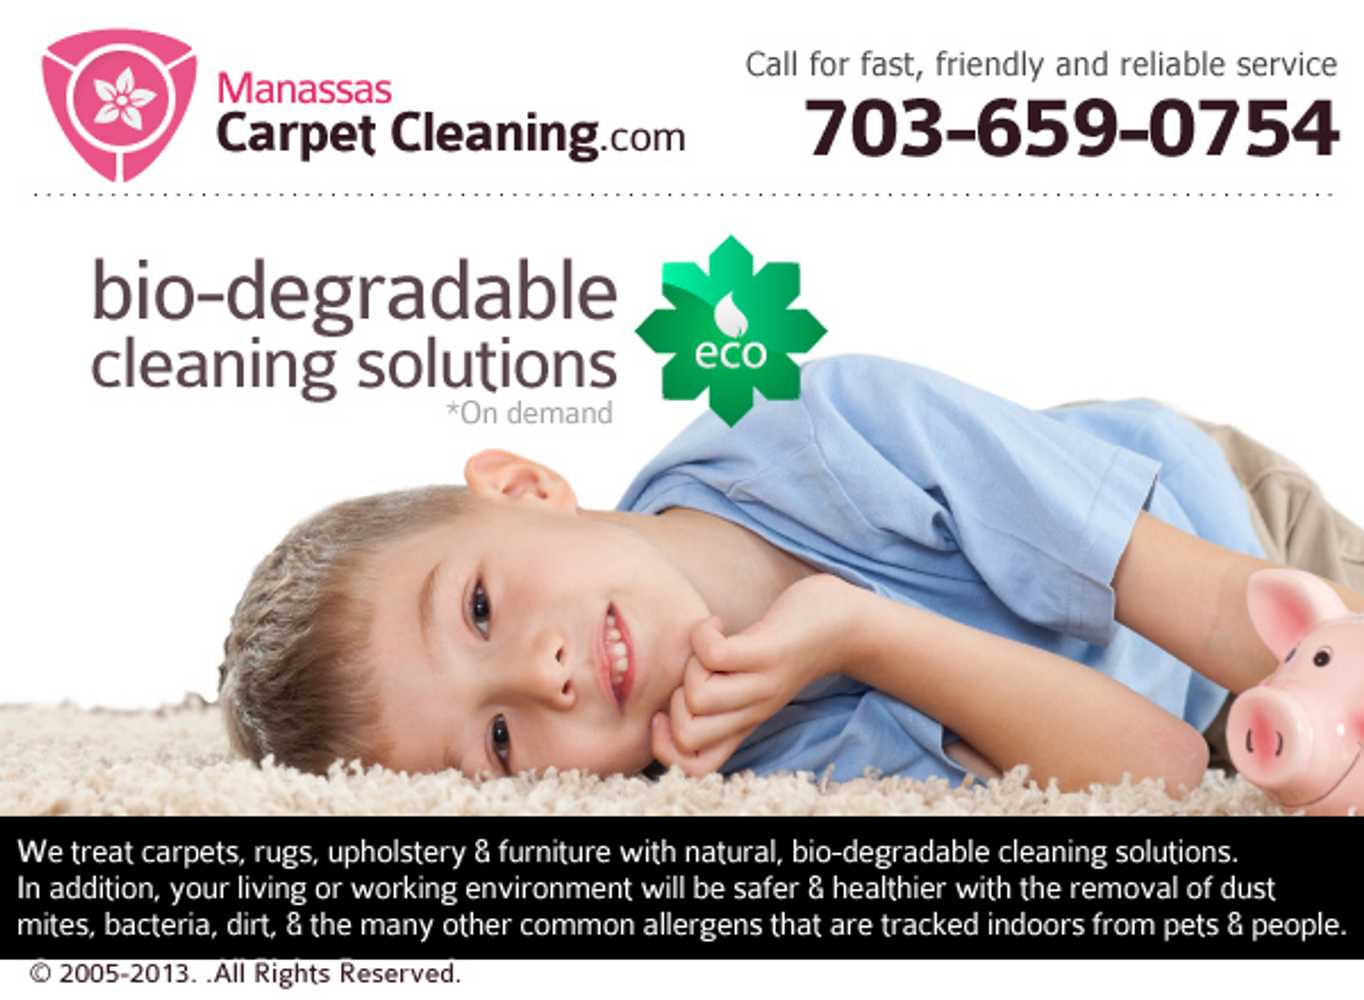 Manassas Carpet Cleaning Project